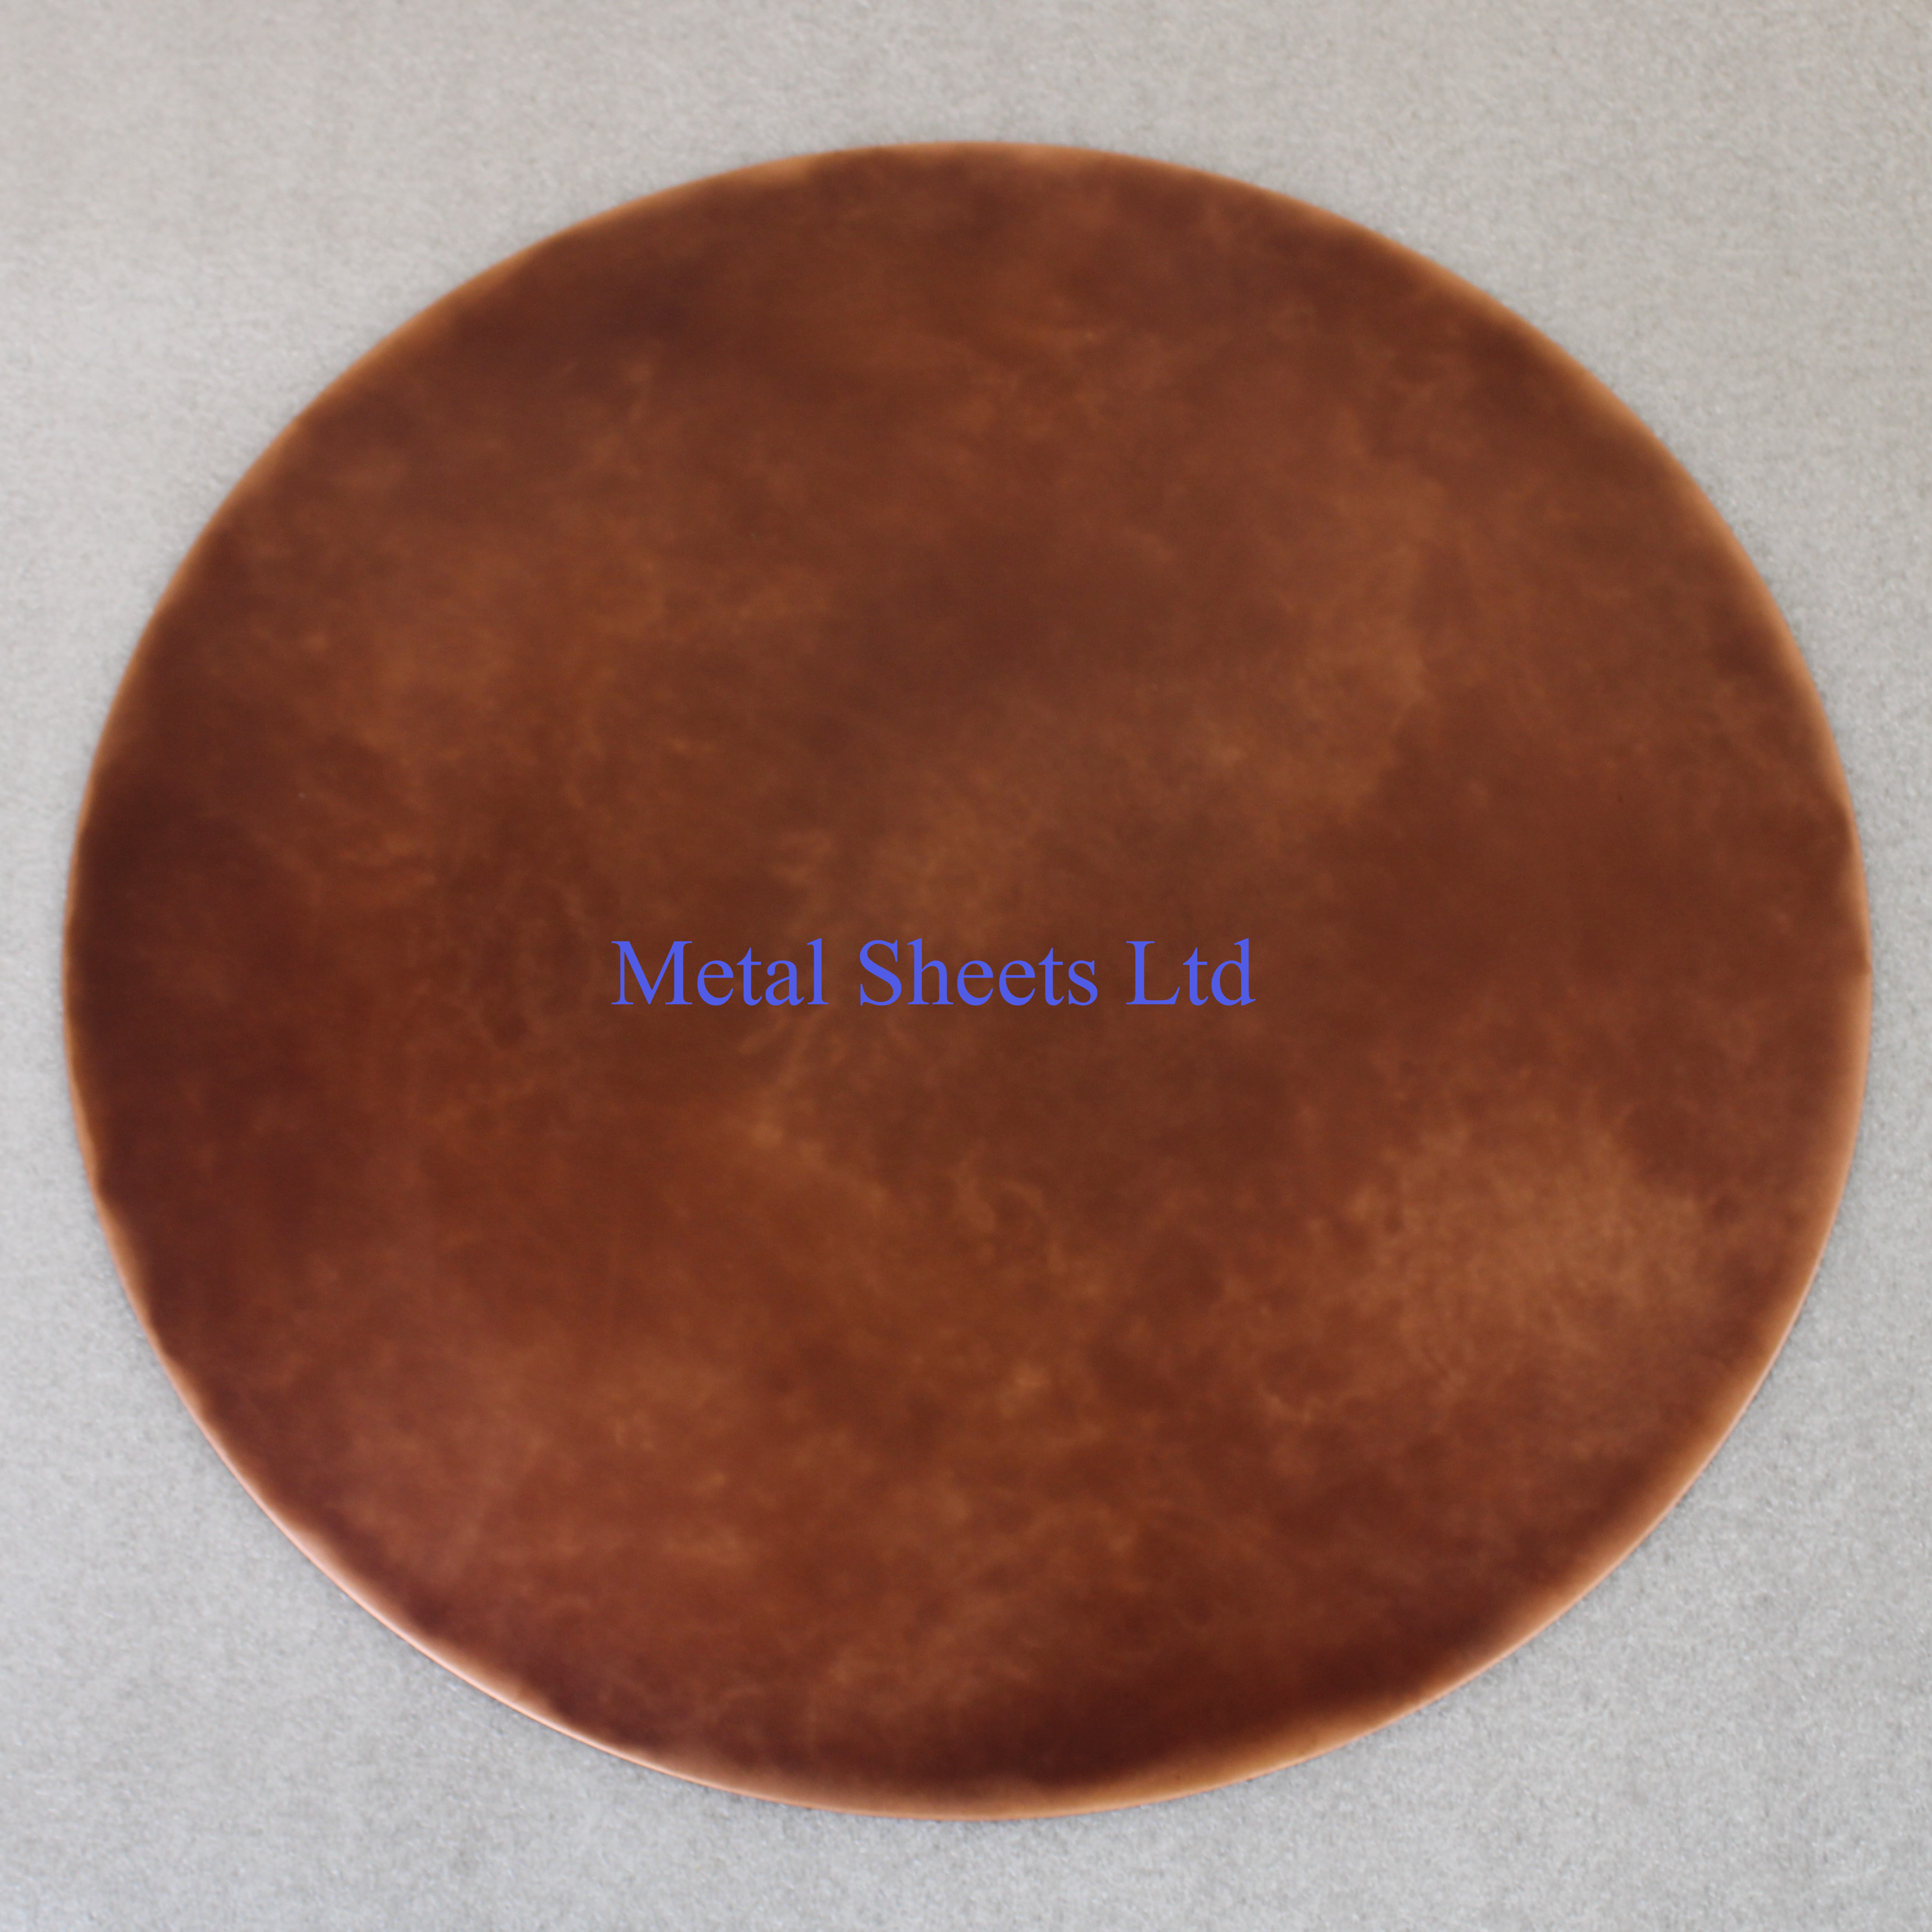 Aged copper patina sheet